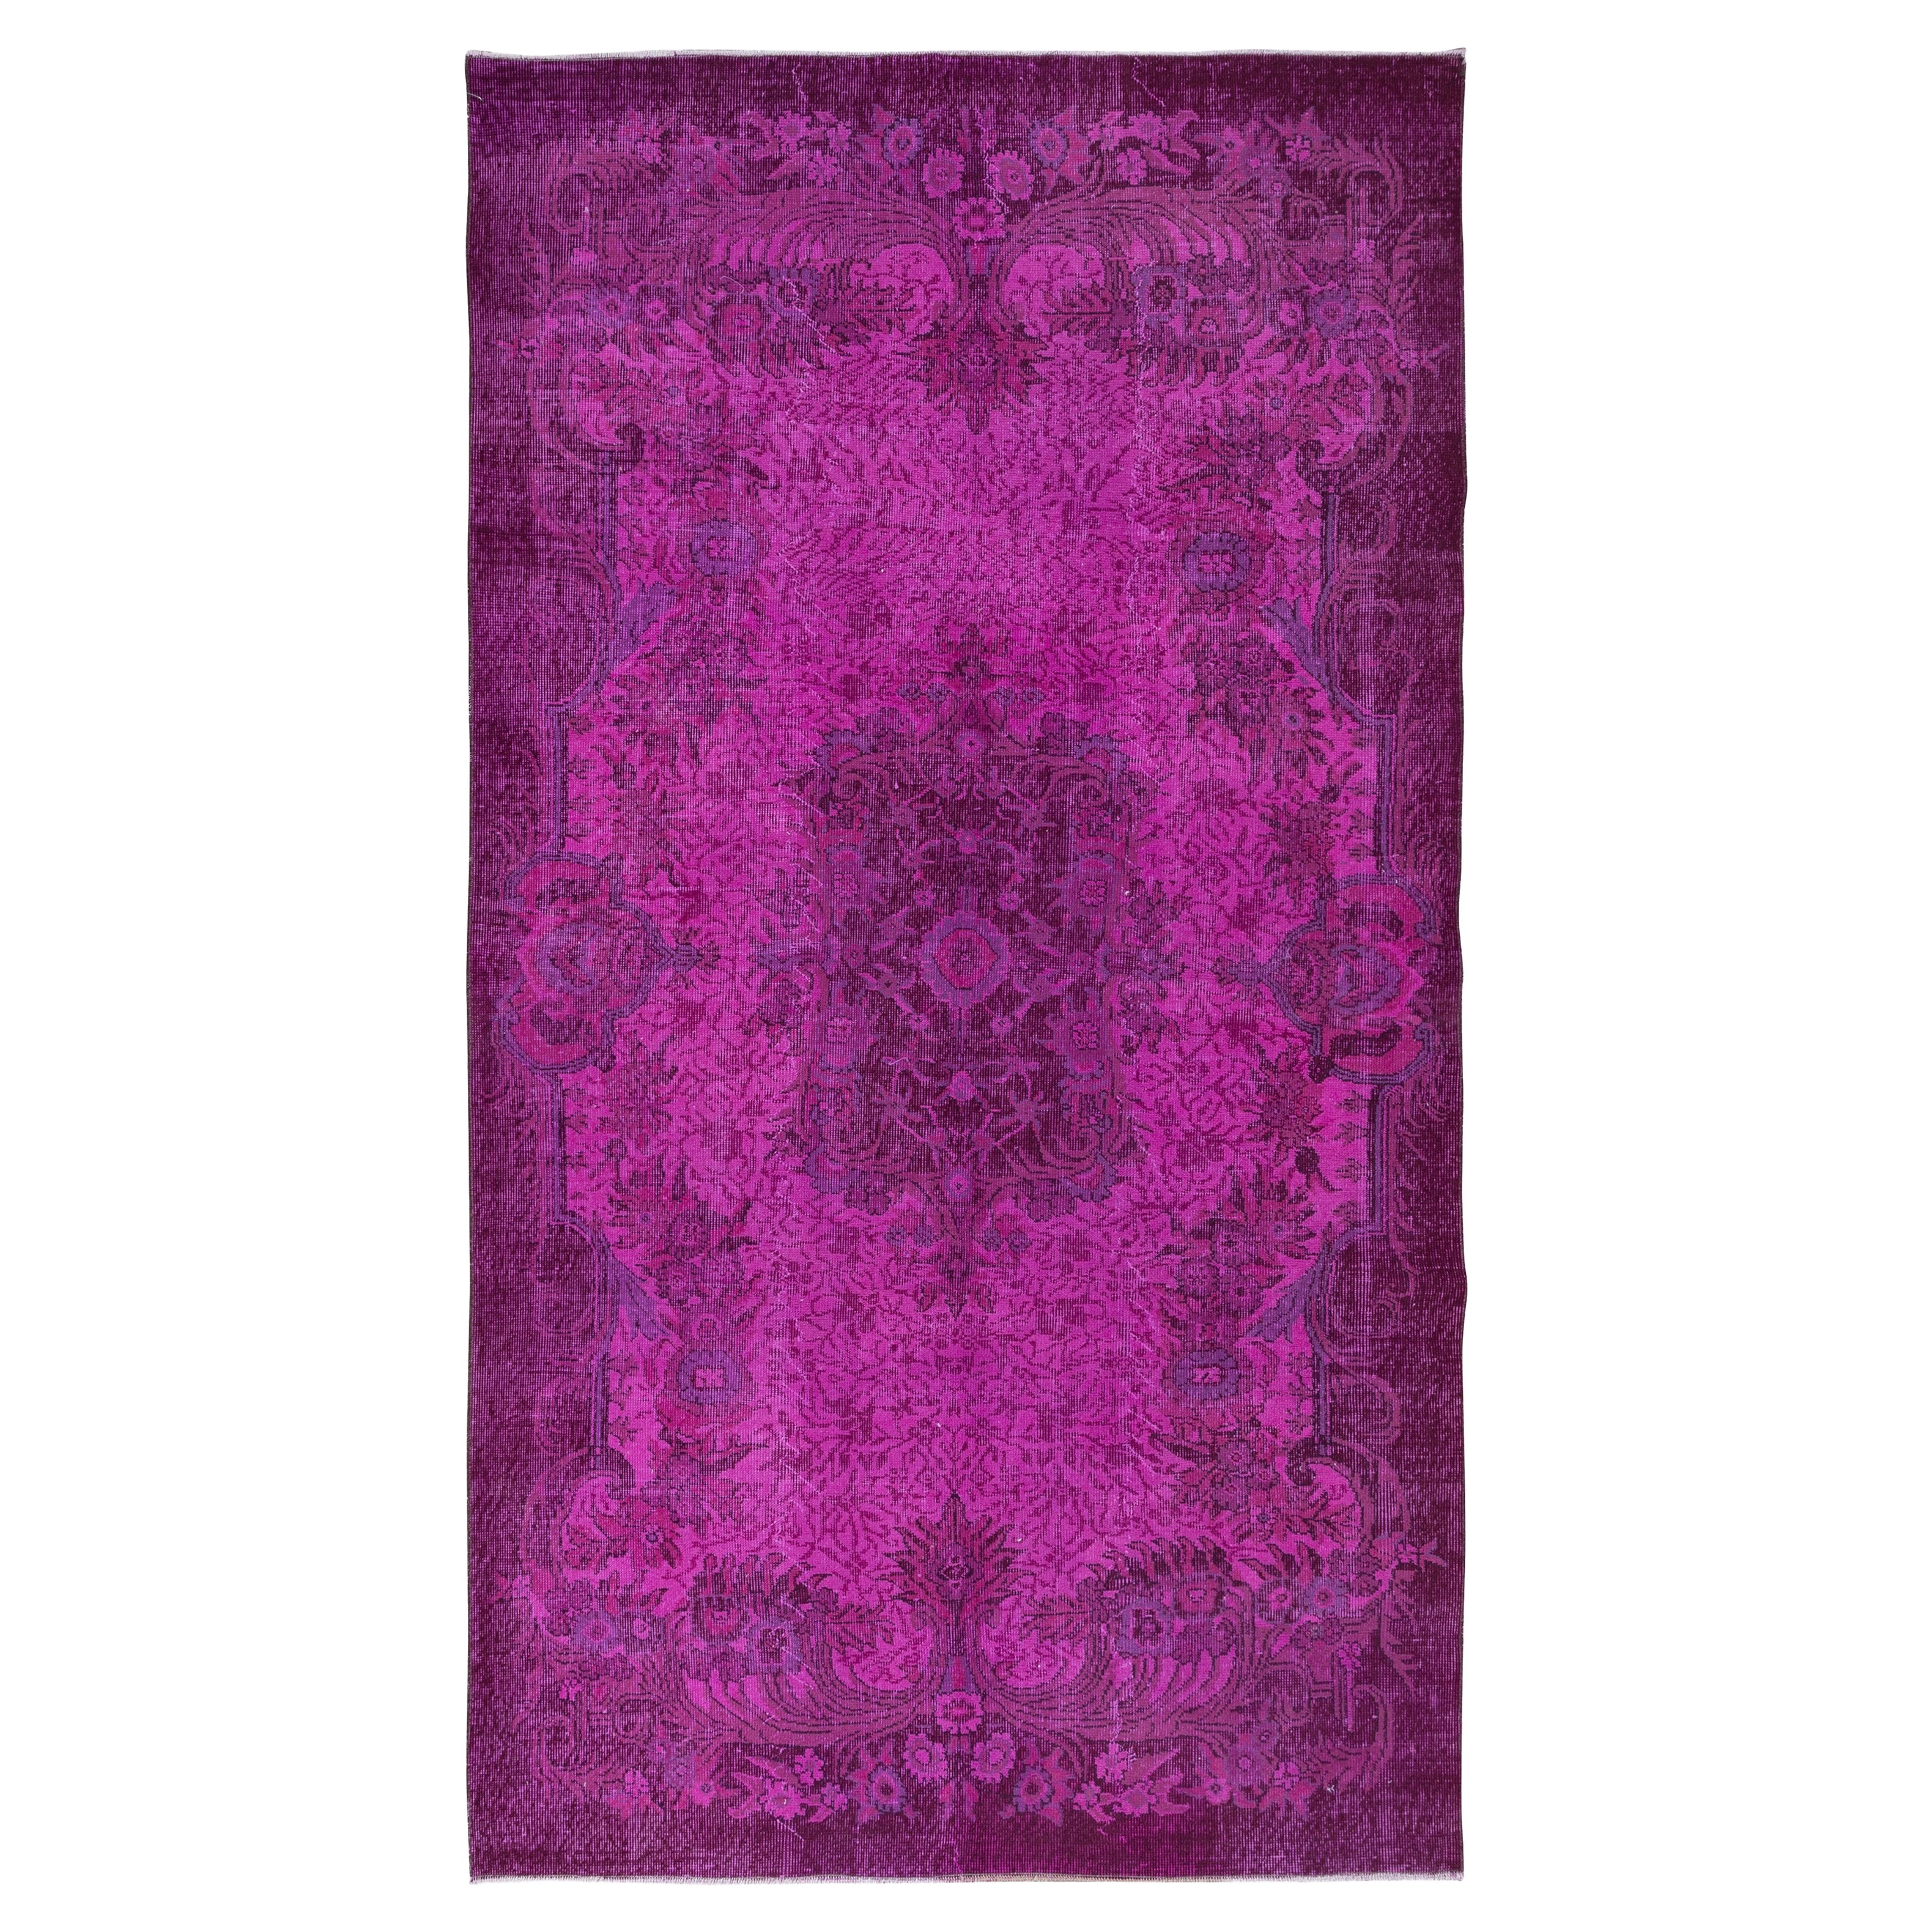 5.4x9.7 Ft Splendid Handmade Pink Area Rug, Modern Turkish Living Room Carpet